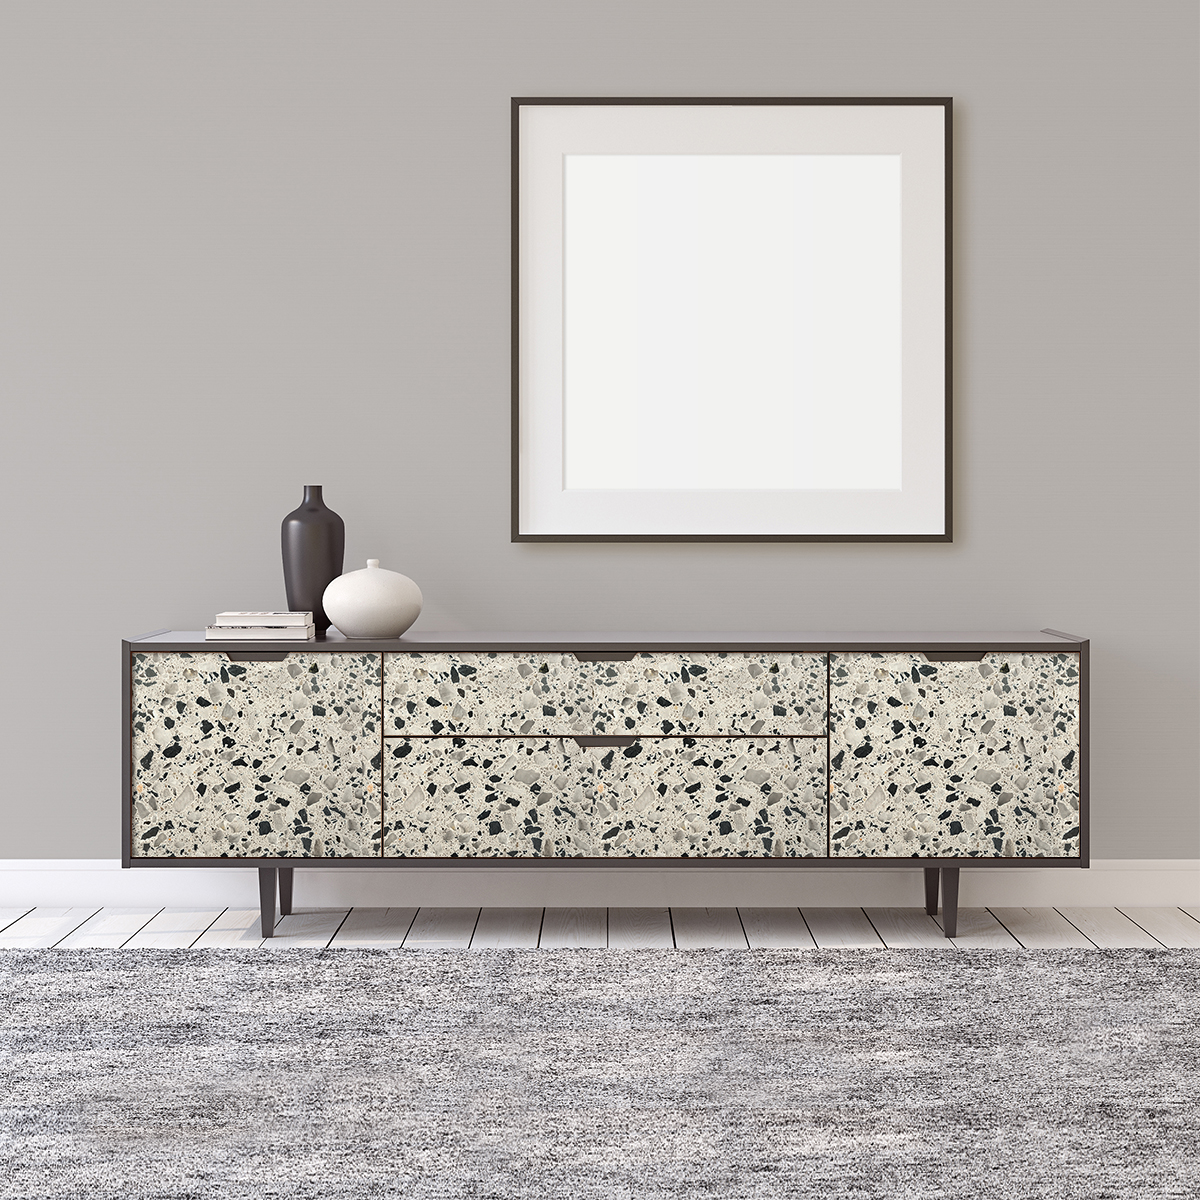 Vinilo terrazzo para muebles marbella - adhesivo de pared - revestimiento  sticker mural decorativo - 60x90cm